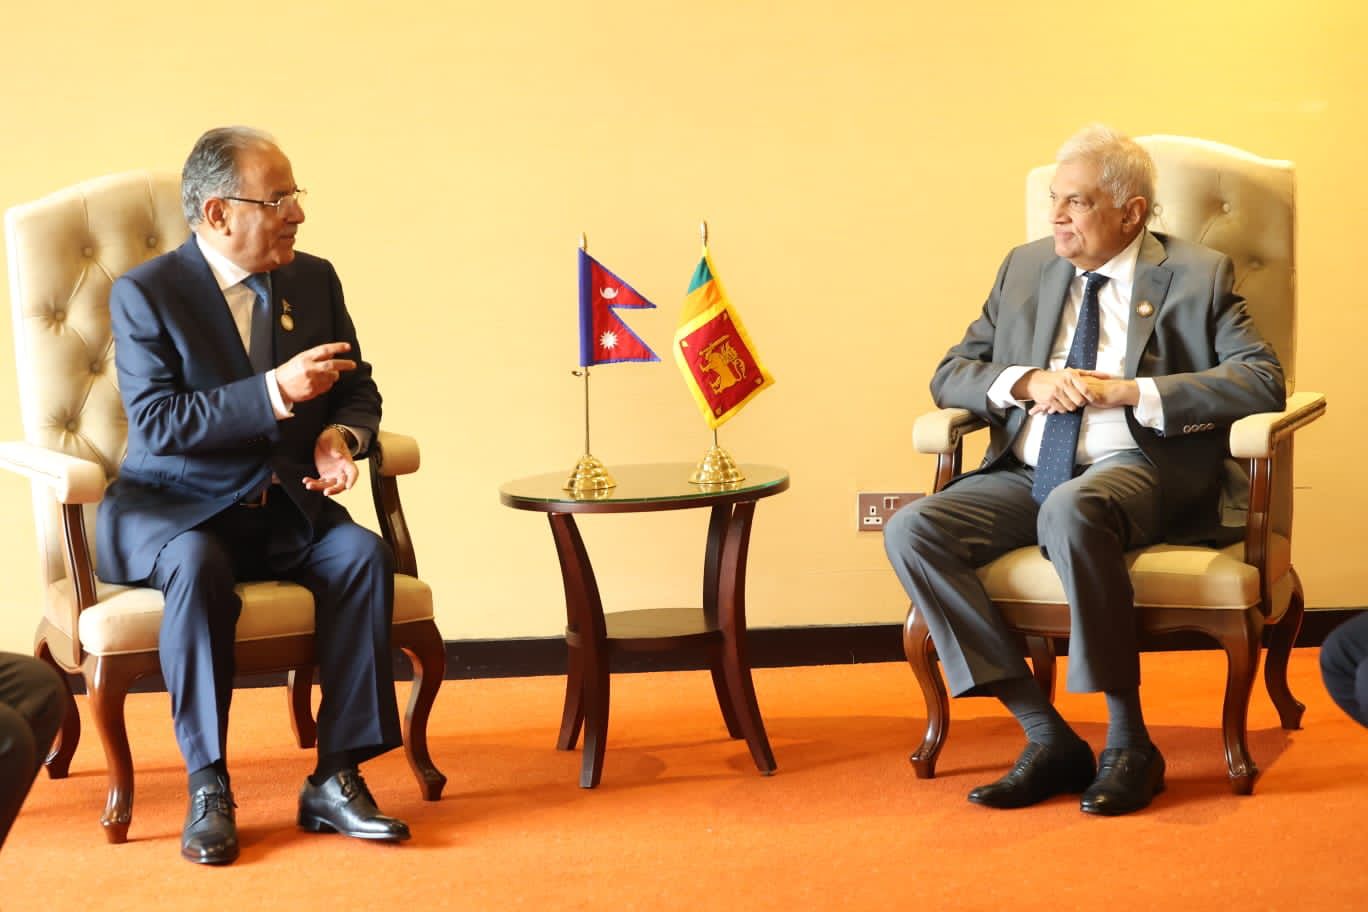 Meeting between Prime Minister Prachanda and President of Sri Lanka1